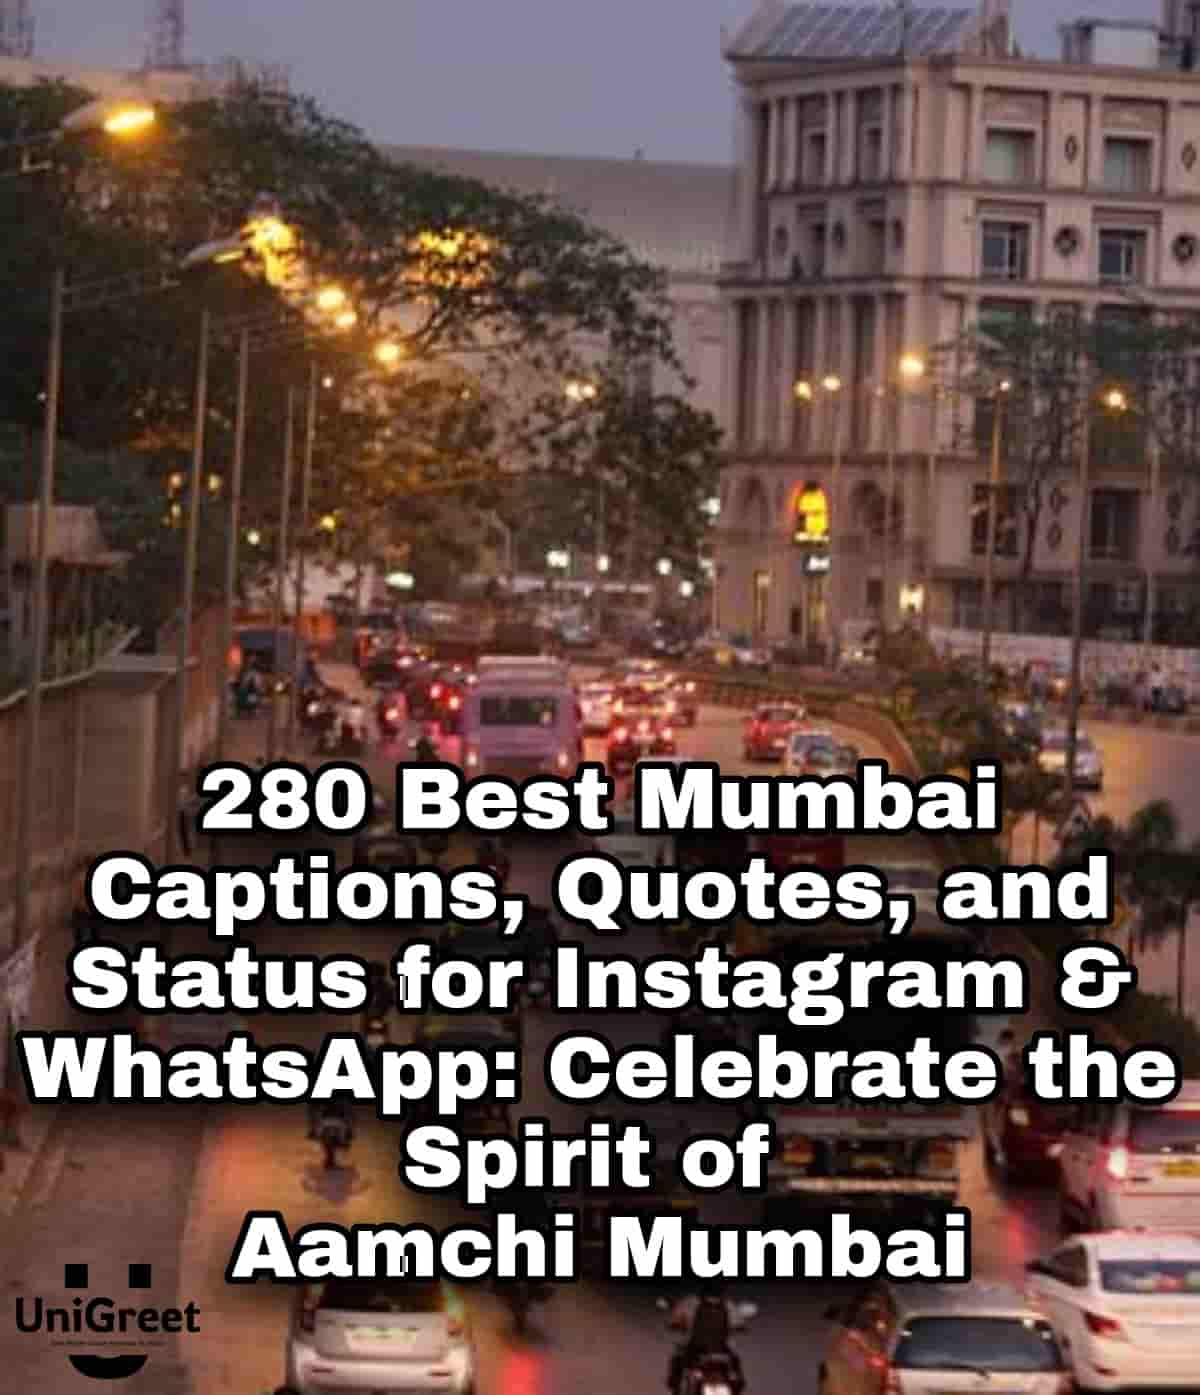 Best Mumbai Captions, Quotes, and Status for Instagram & WhatsApp: Celebrate the Spirit of Aamchi Mumbai